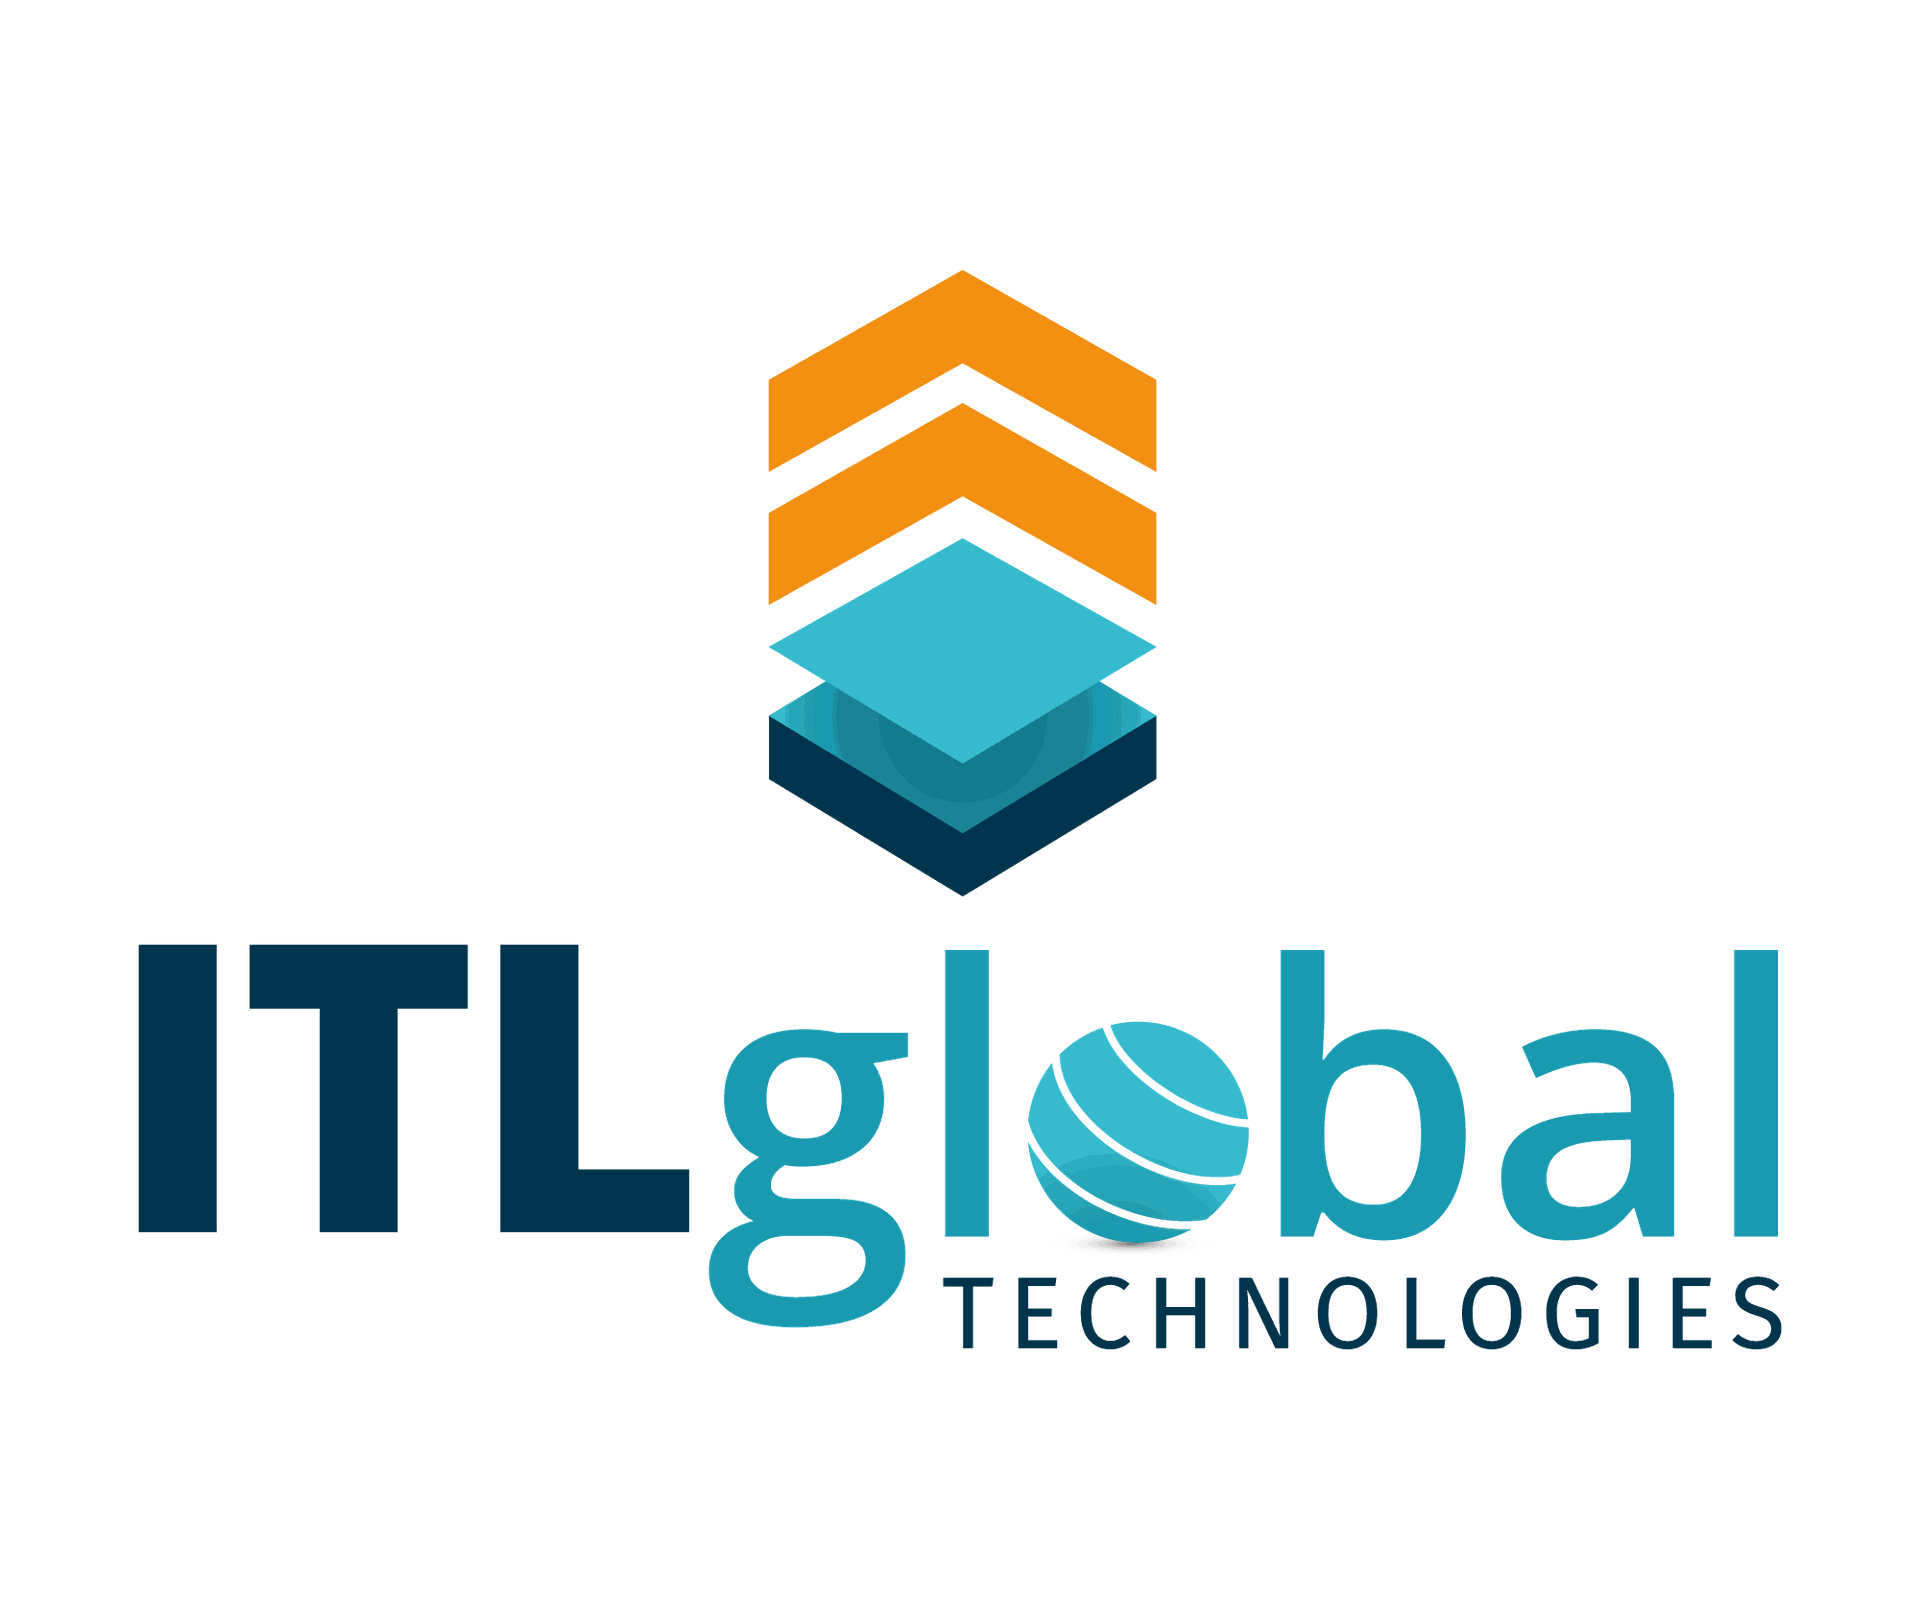 ITL Global